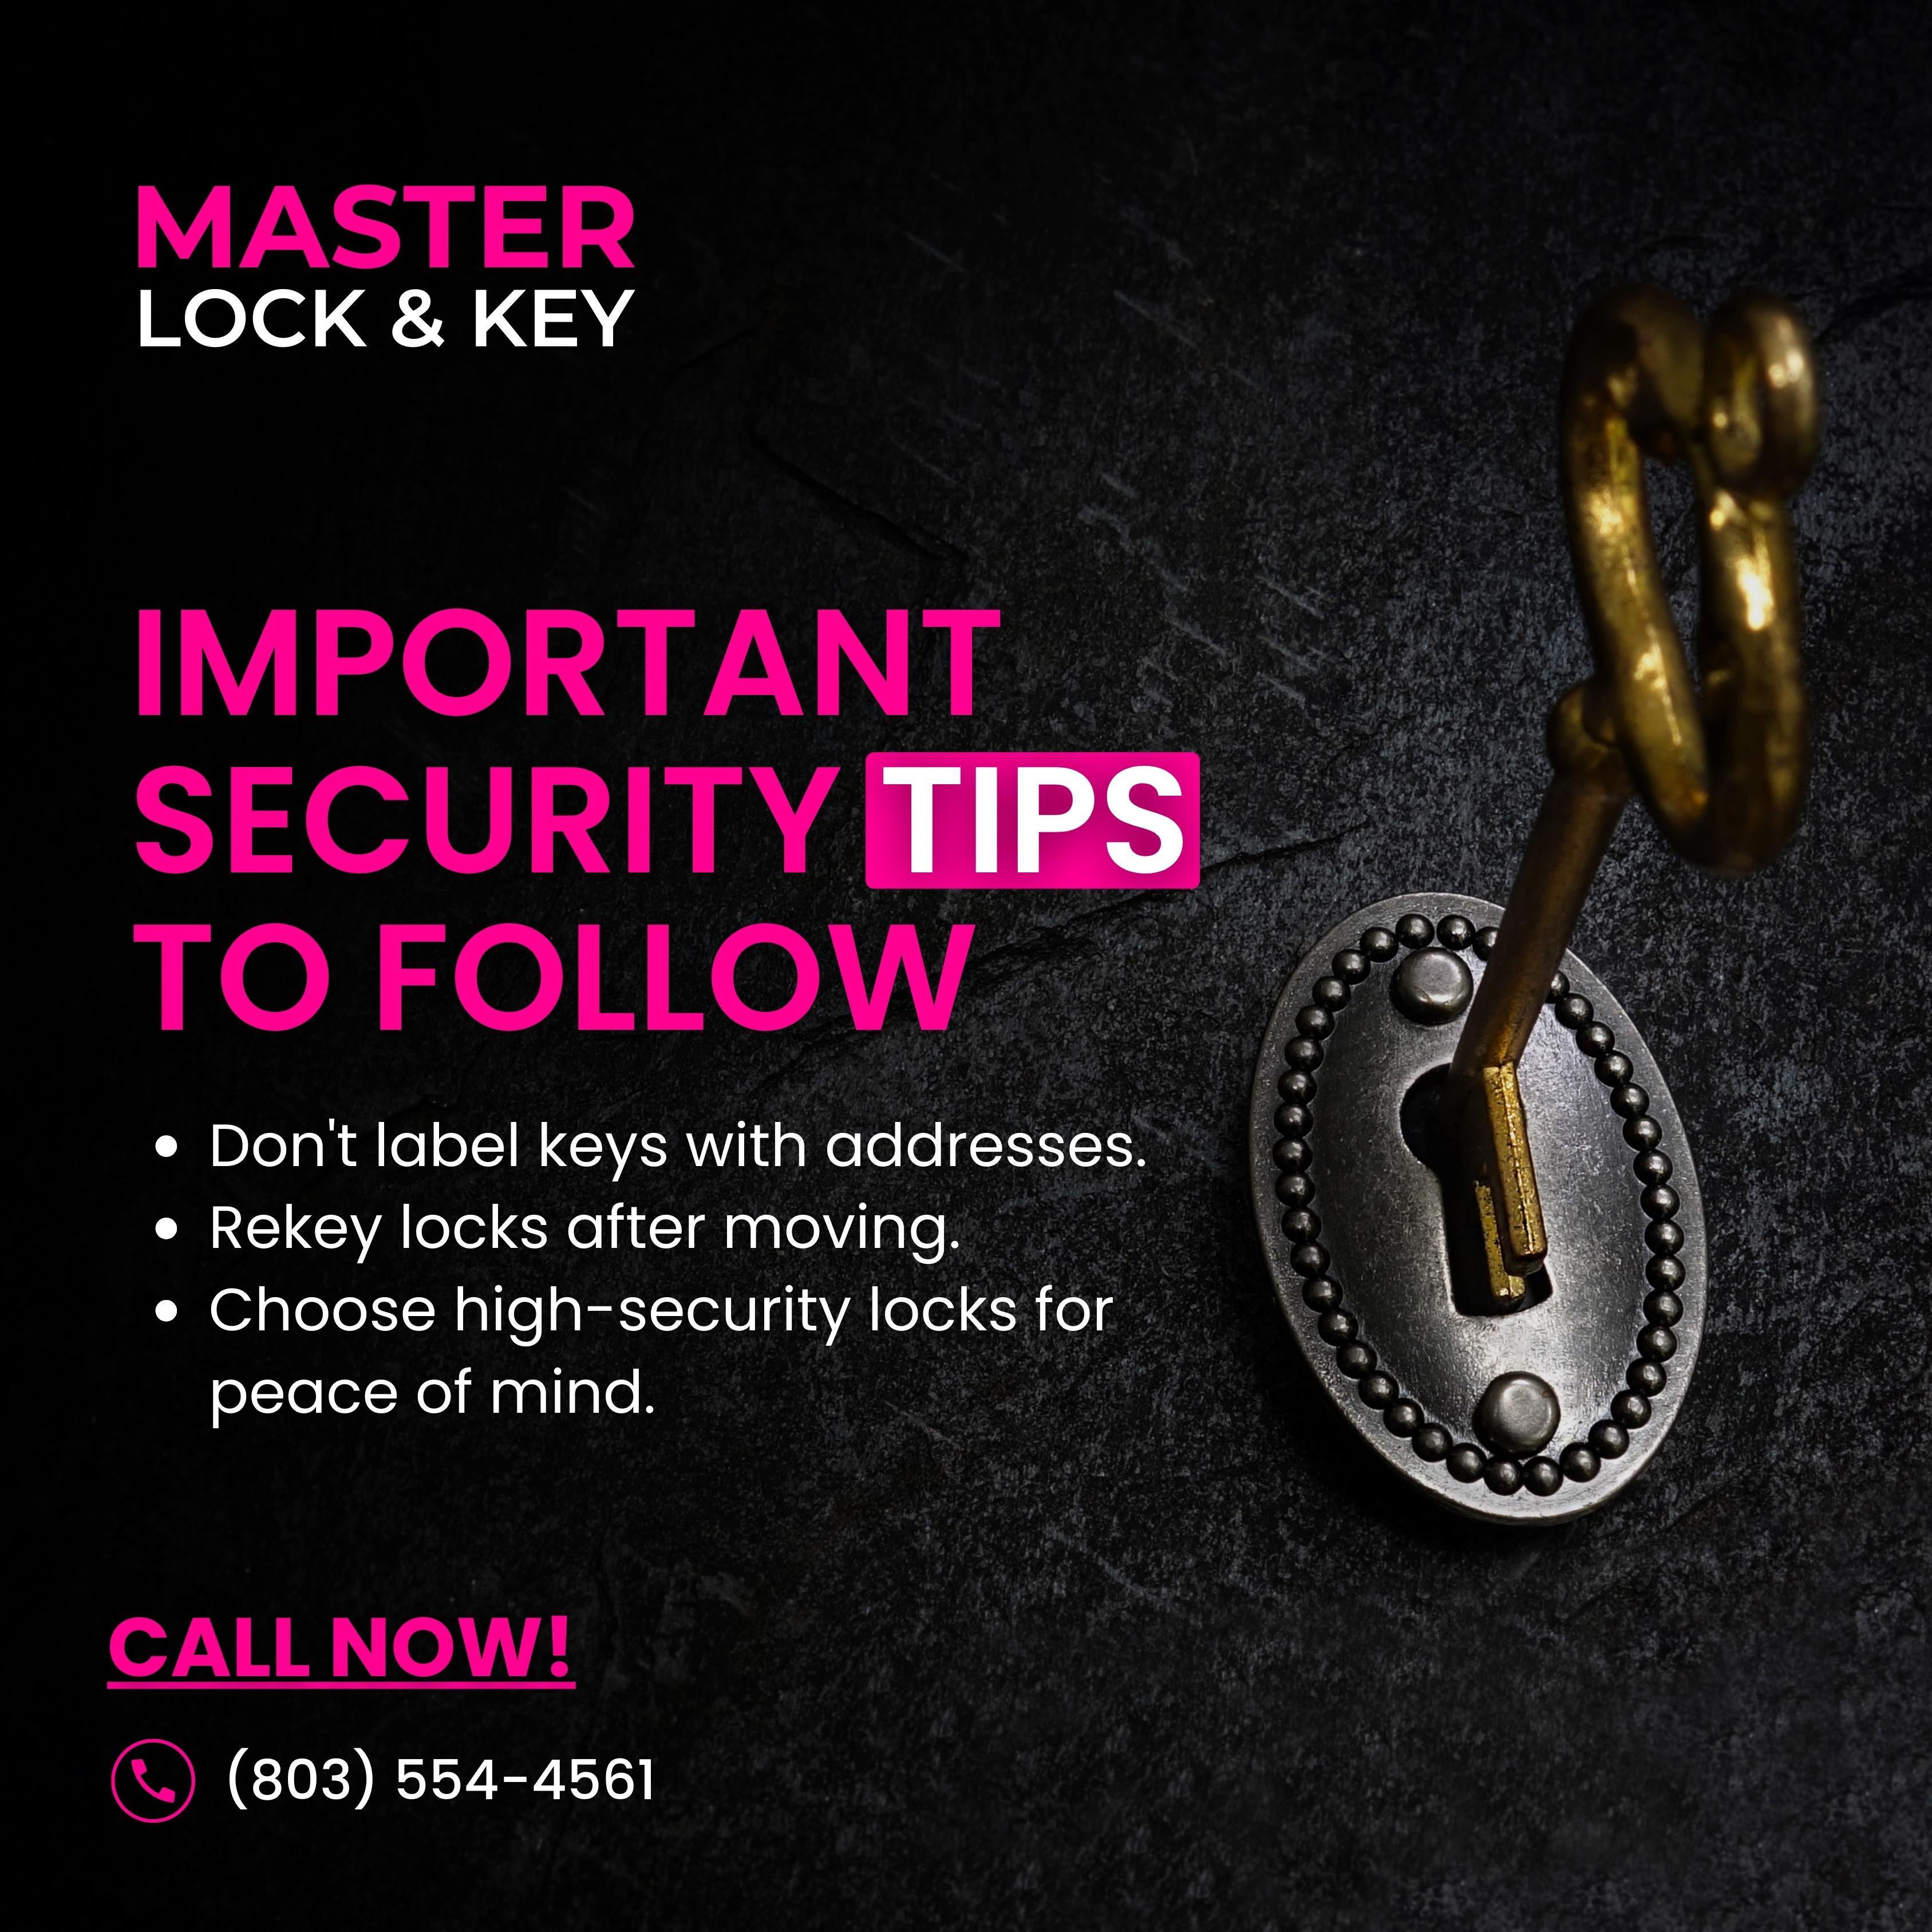 Mastering Security Best Locksmith Services in Charlotte, North Carolina